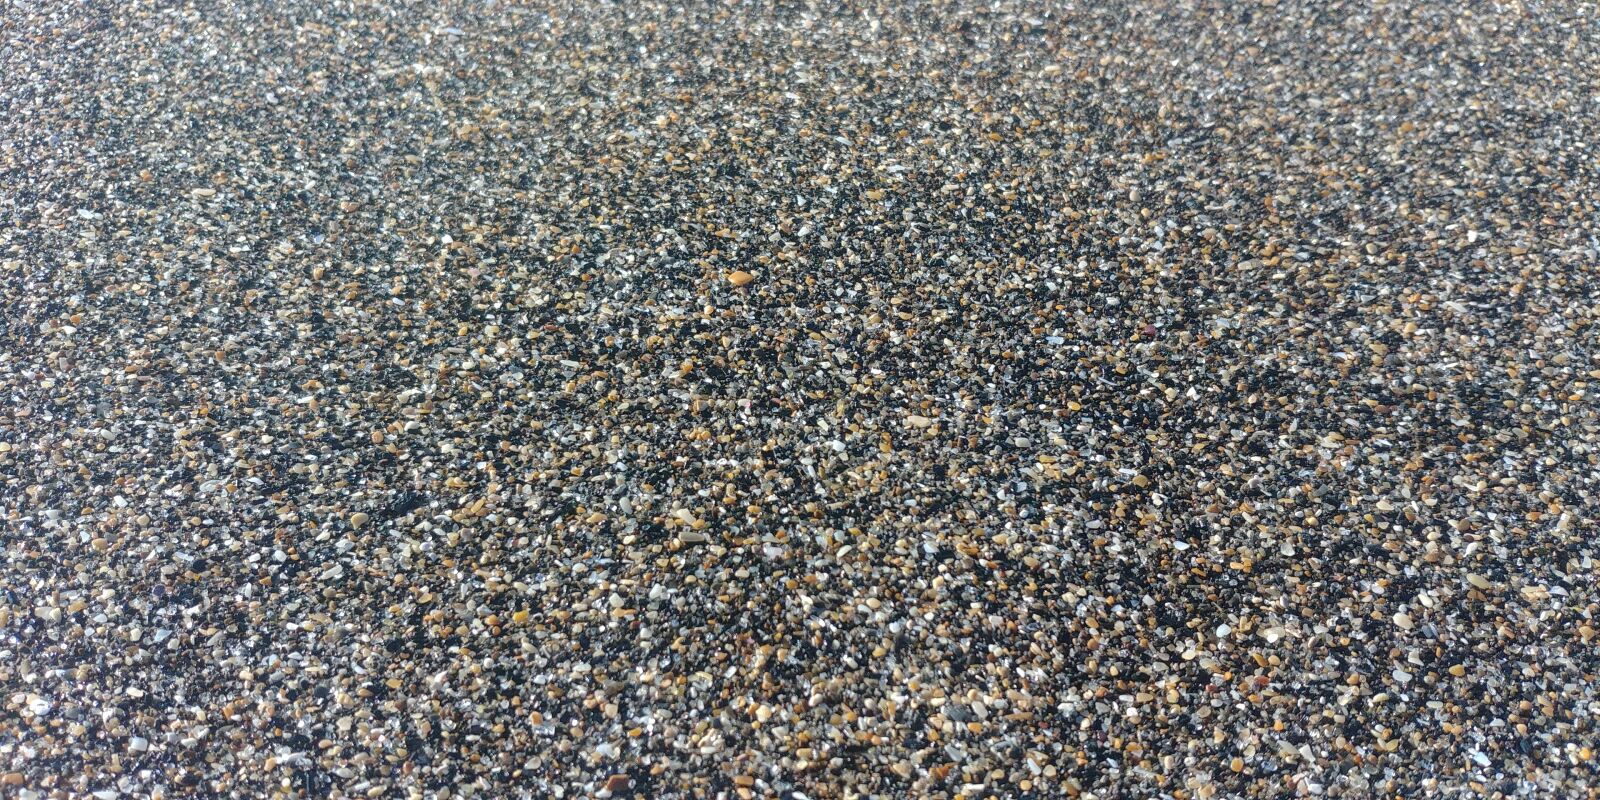 LG G6 sample photo. Pebbles, shells, beach photography